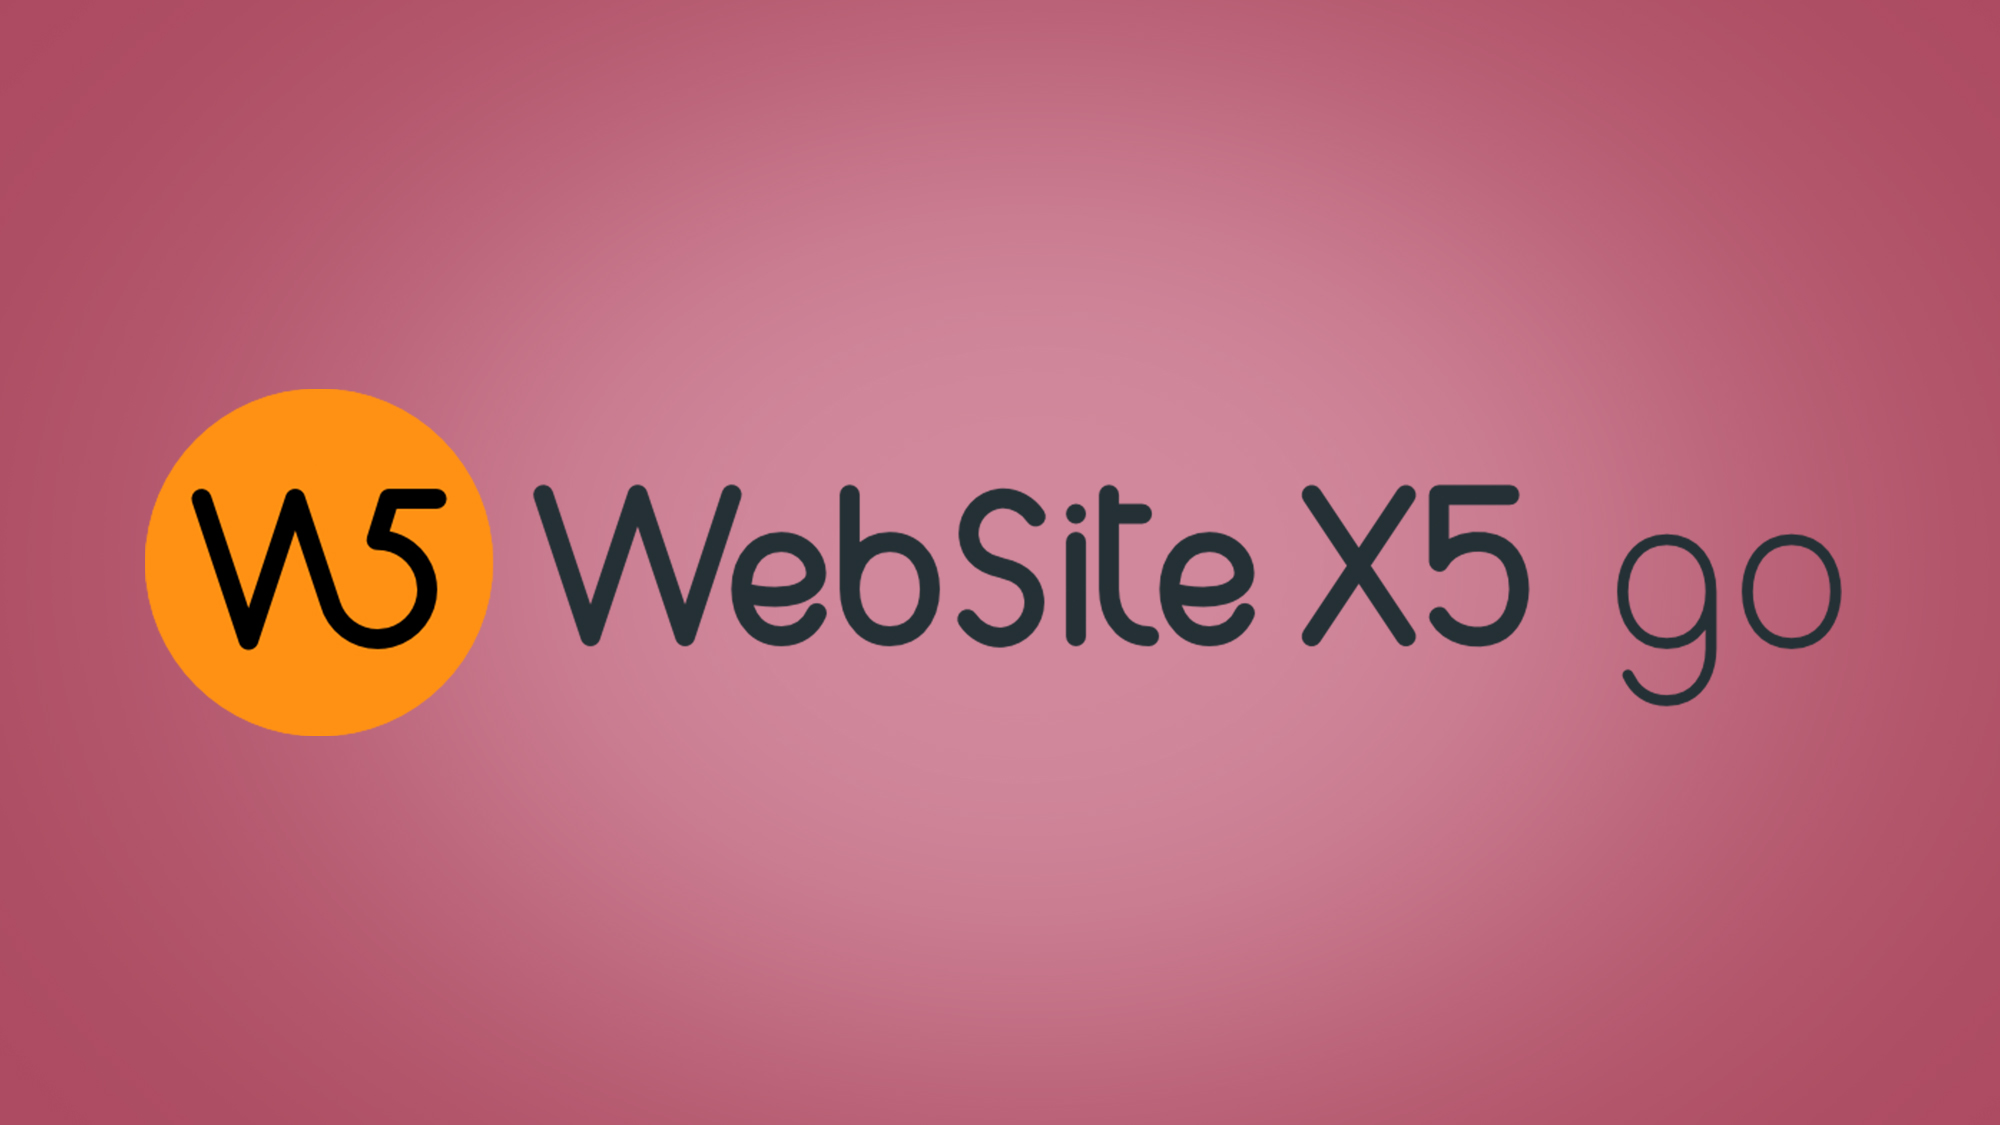 WebSite X5 GO logo on pink background